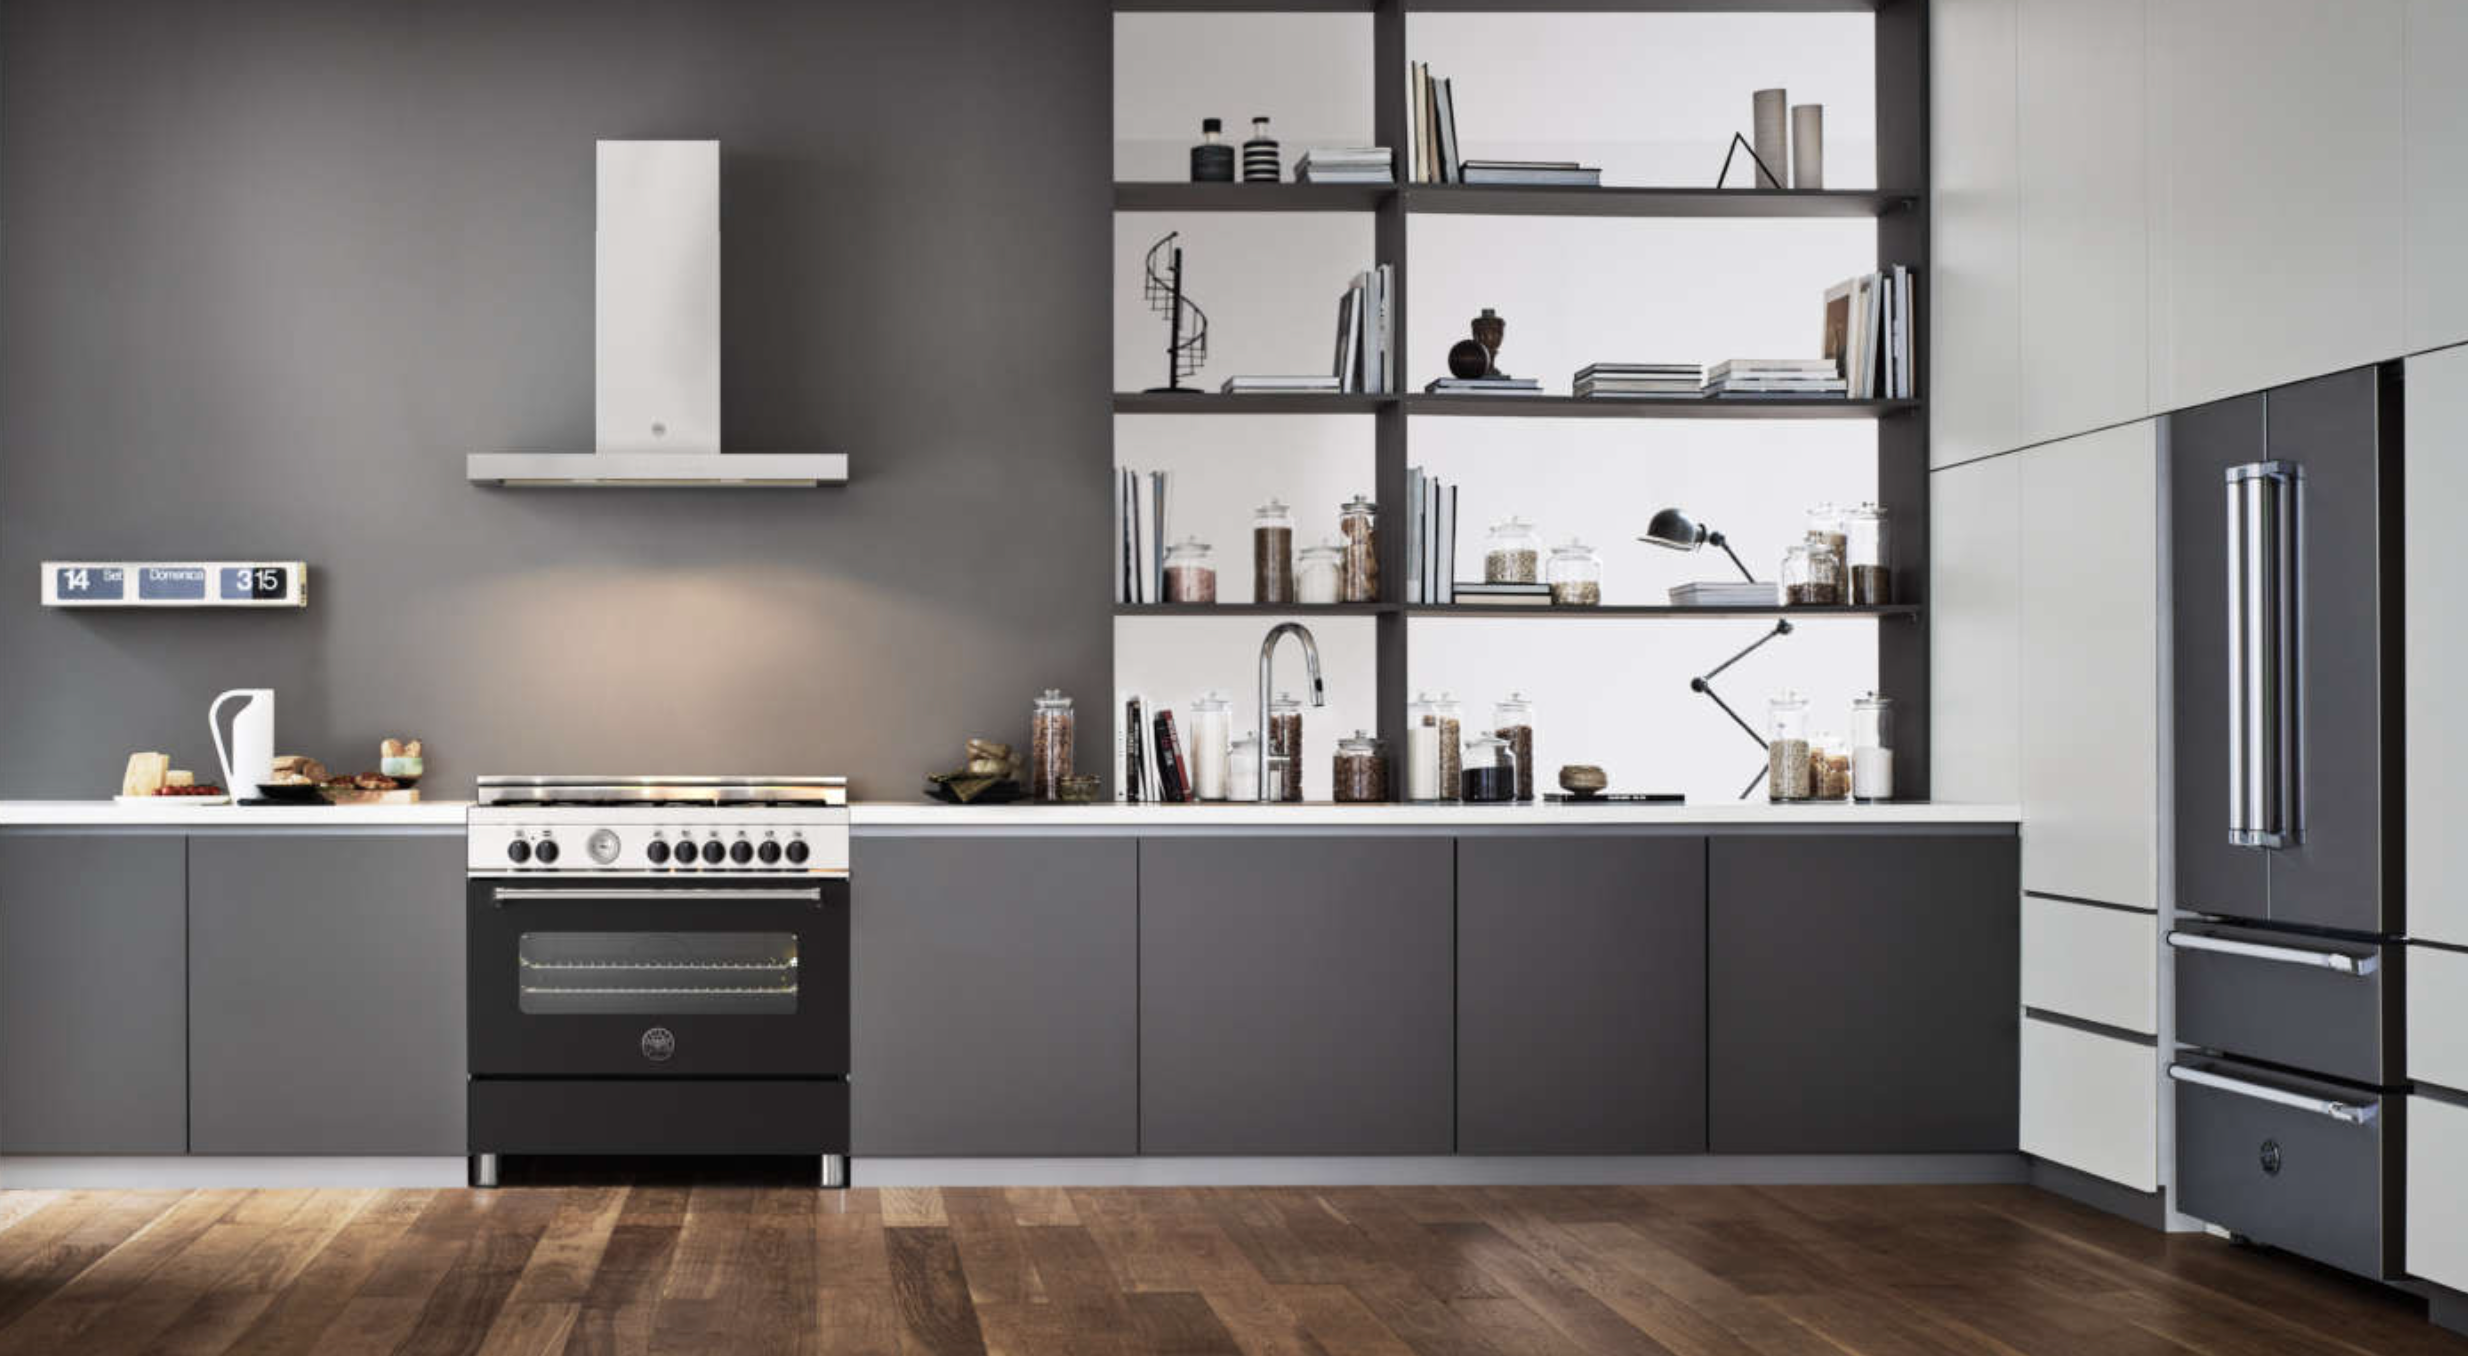 The total black kitchen   Home Appliances World